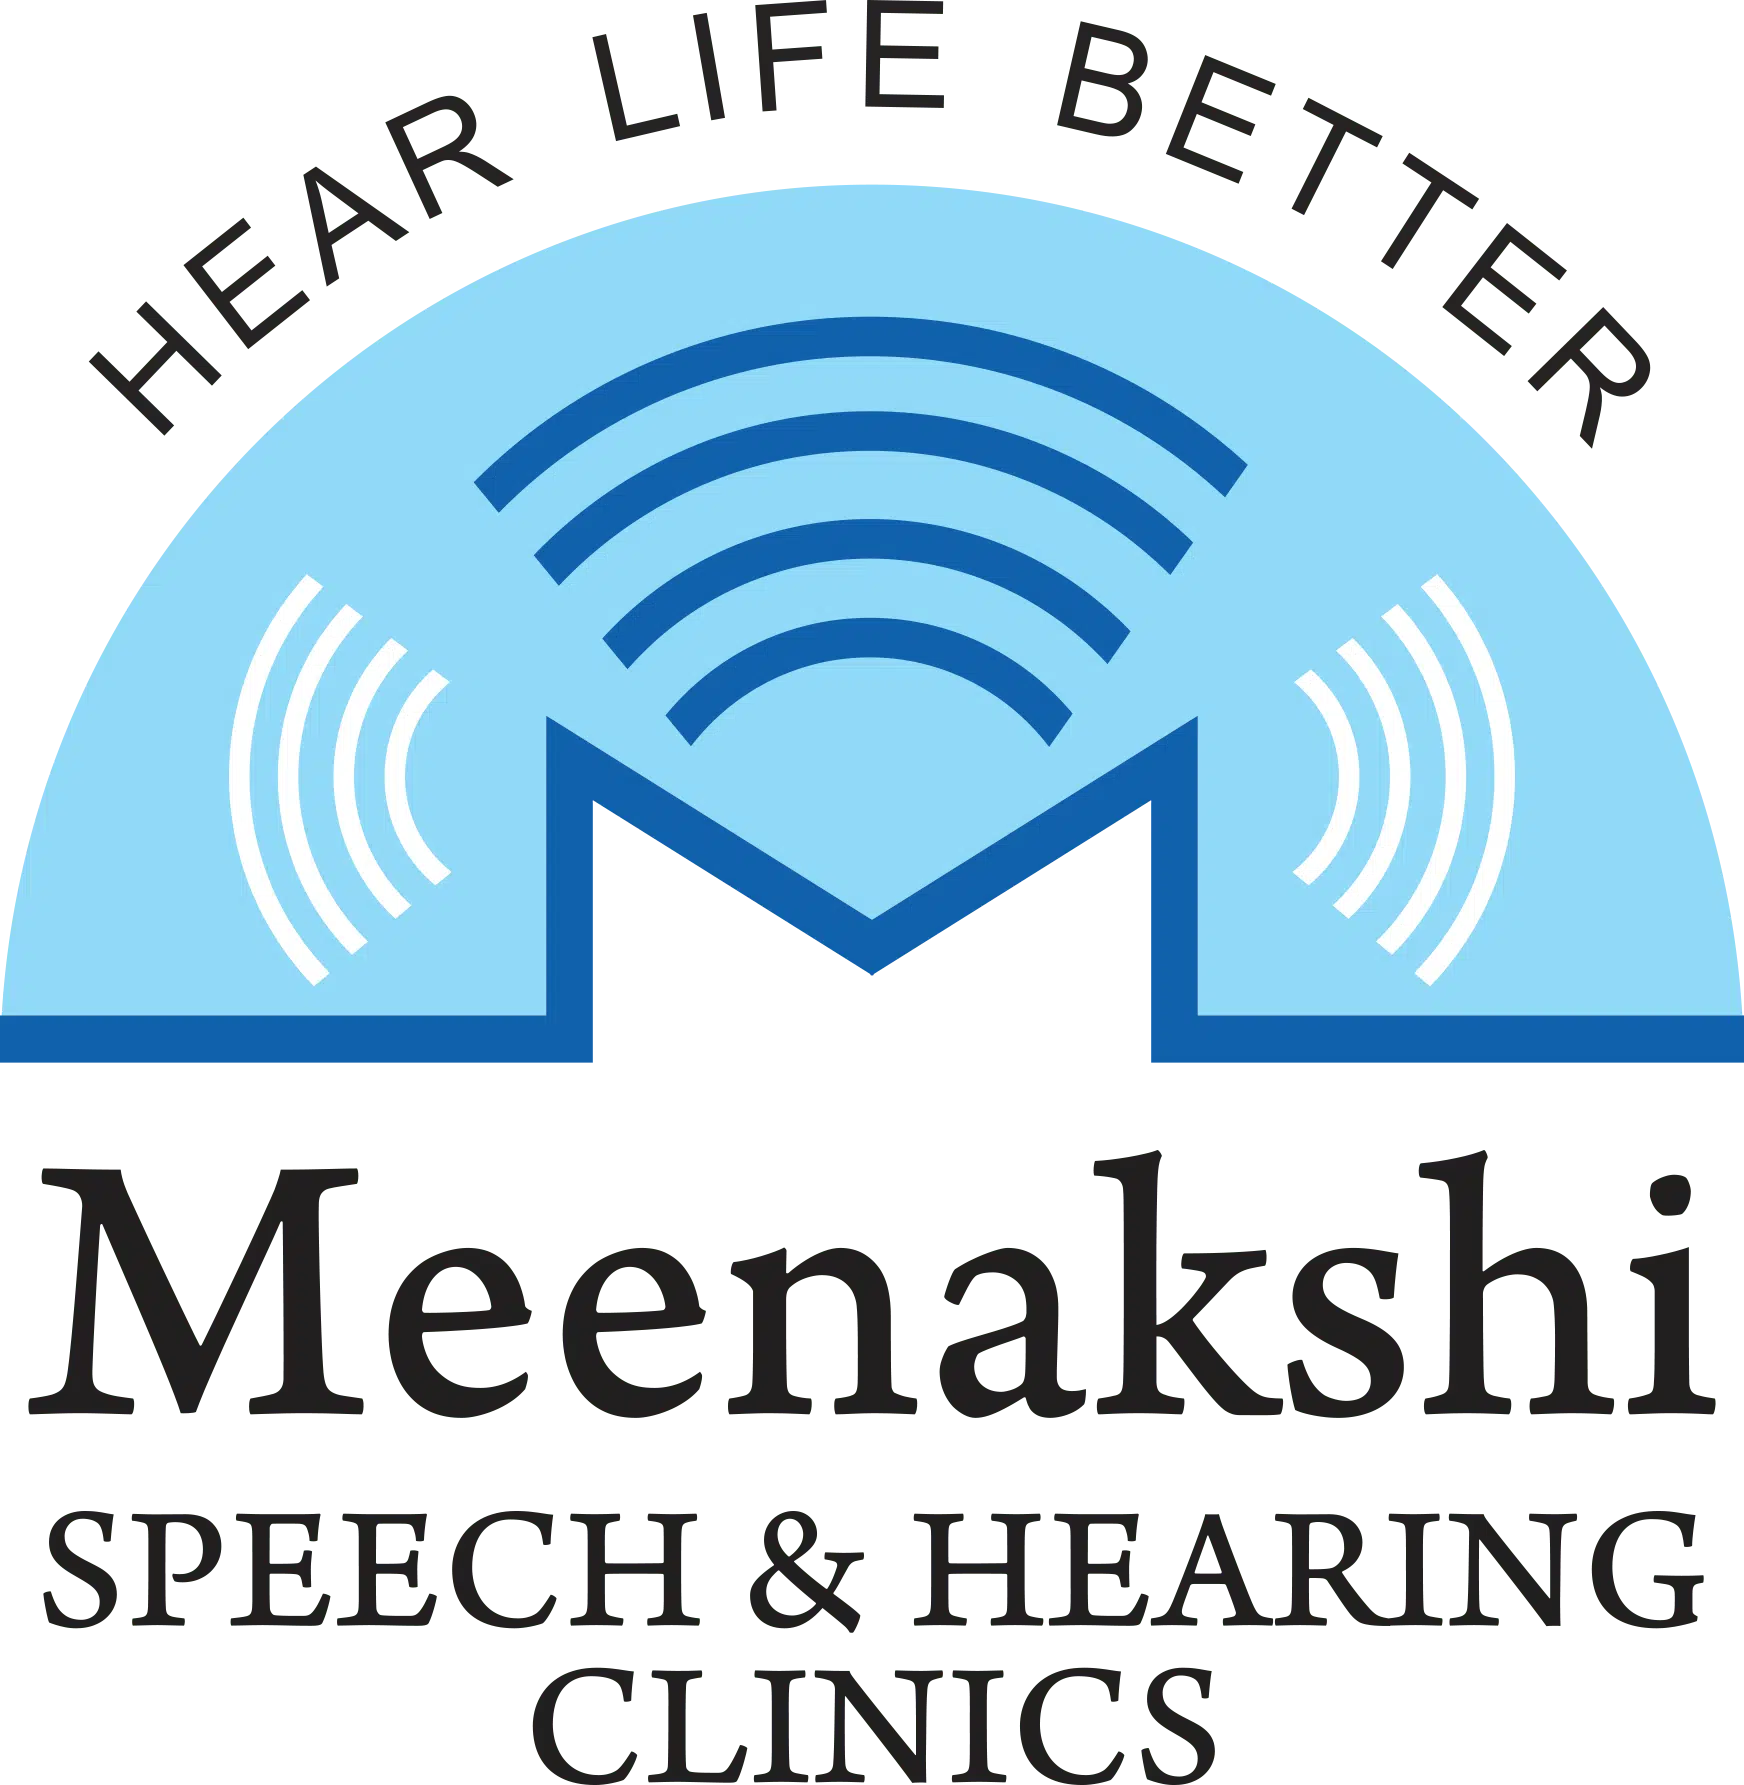 Meenakshi Speech & Hearing Clinic